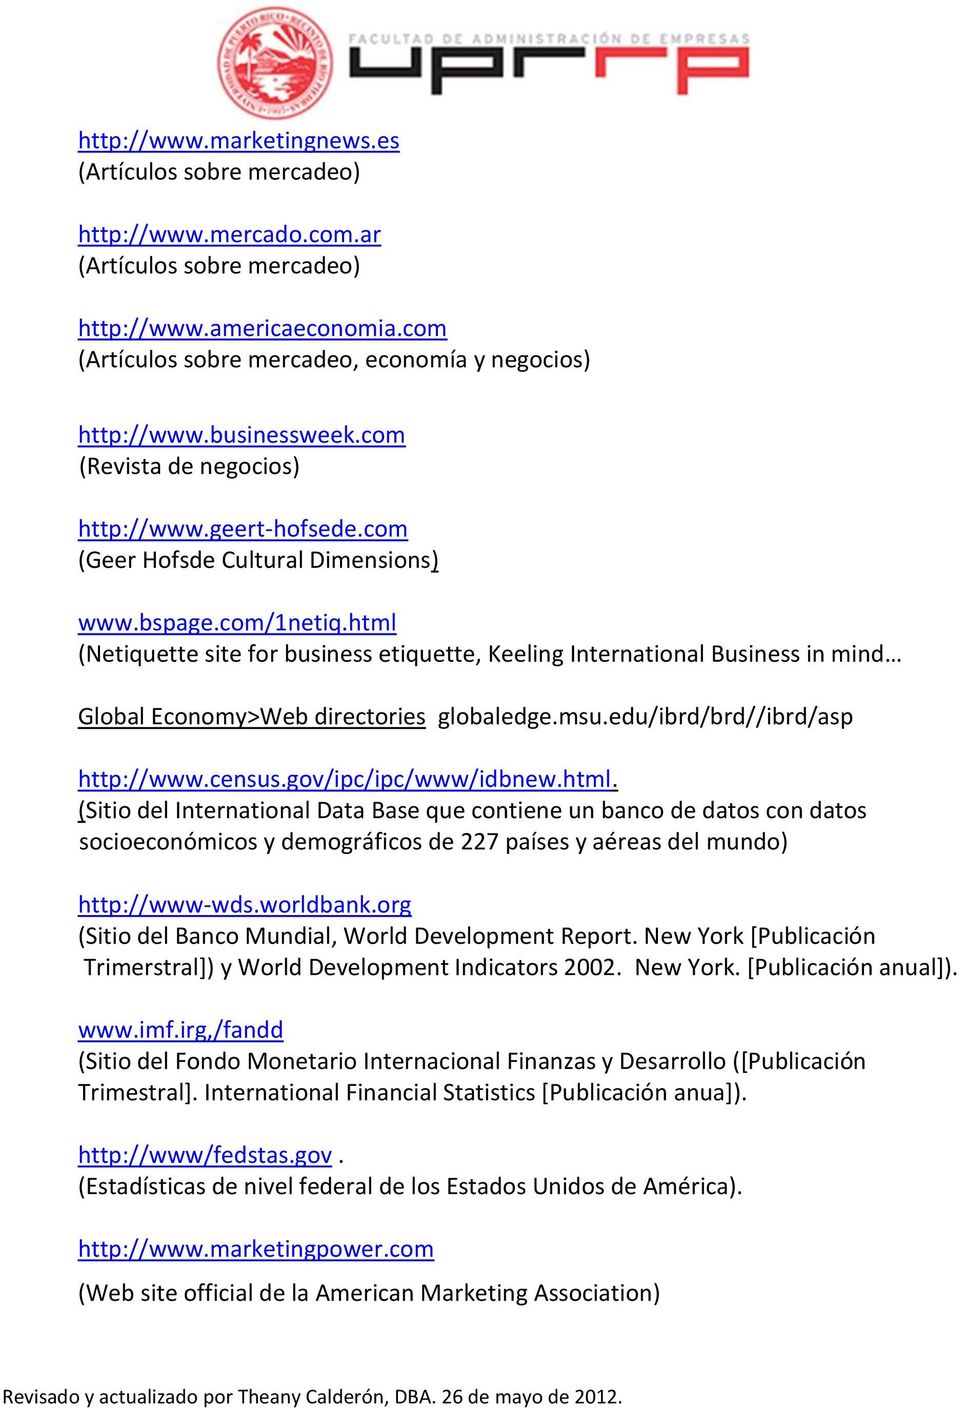 html (Netiquette site for business etiquette, Keeling International Business in mind Global Economy>Web directories globaledge.msu.edu/ibrd/brd//ibrd/asp http://www.census.gov/ipc/ipc/www/idbnew.html. (Sitio del International Data Base que contiene un banco de datos con datos socioeconómicos y demográficos de 227 países y aéreas del mundo) http://www-wds.